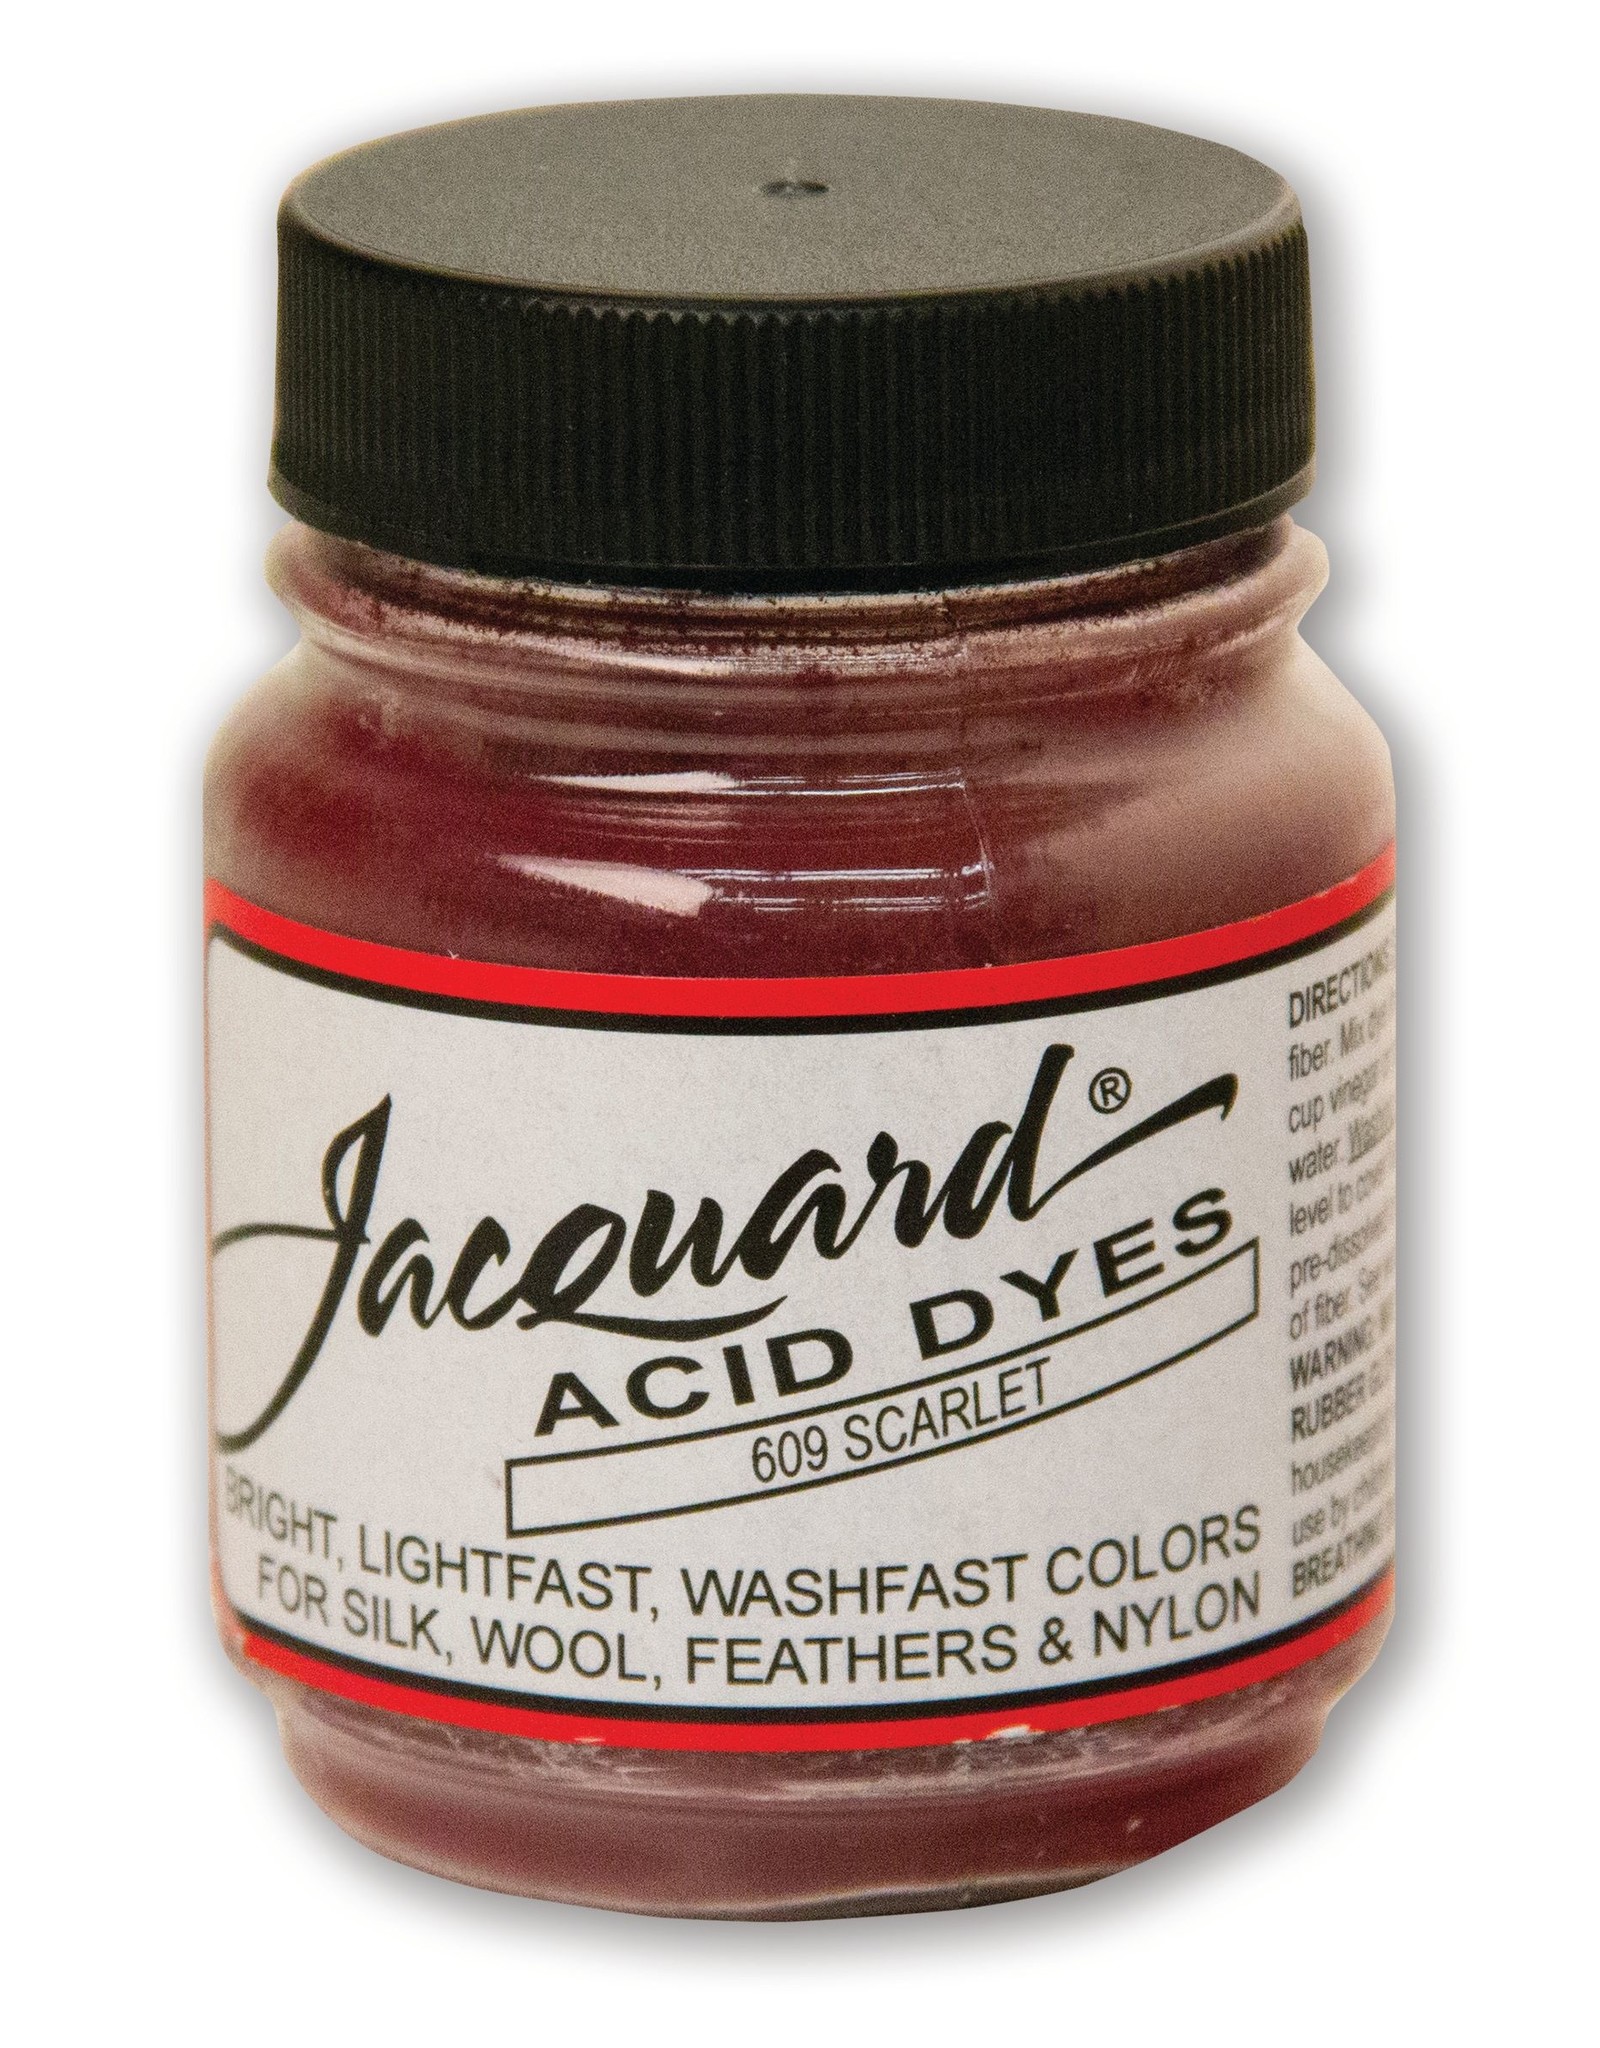 Jacquard Jacquard Acid Dye, #609 Scarlet ½oz